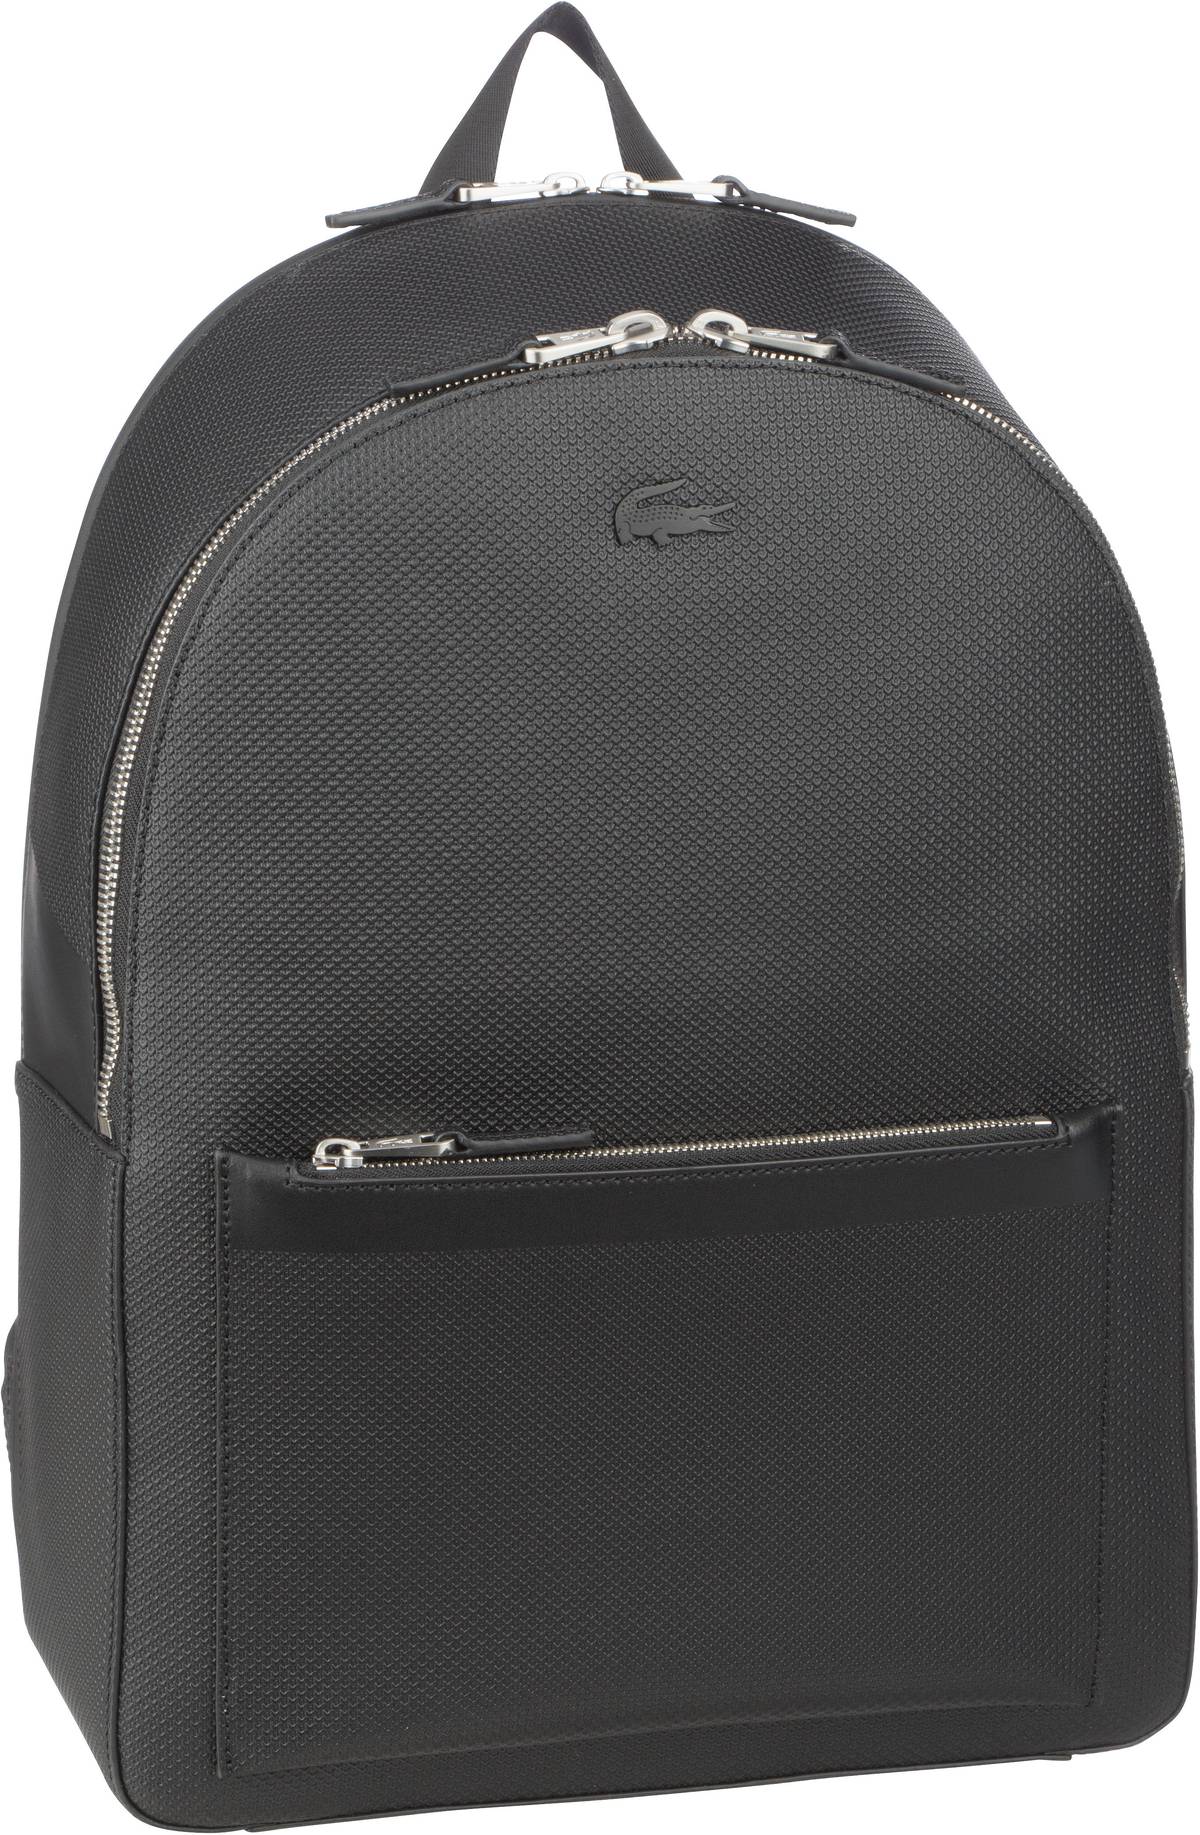 Lacoste Chantaco Backpack 3269 - Black